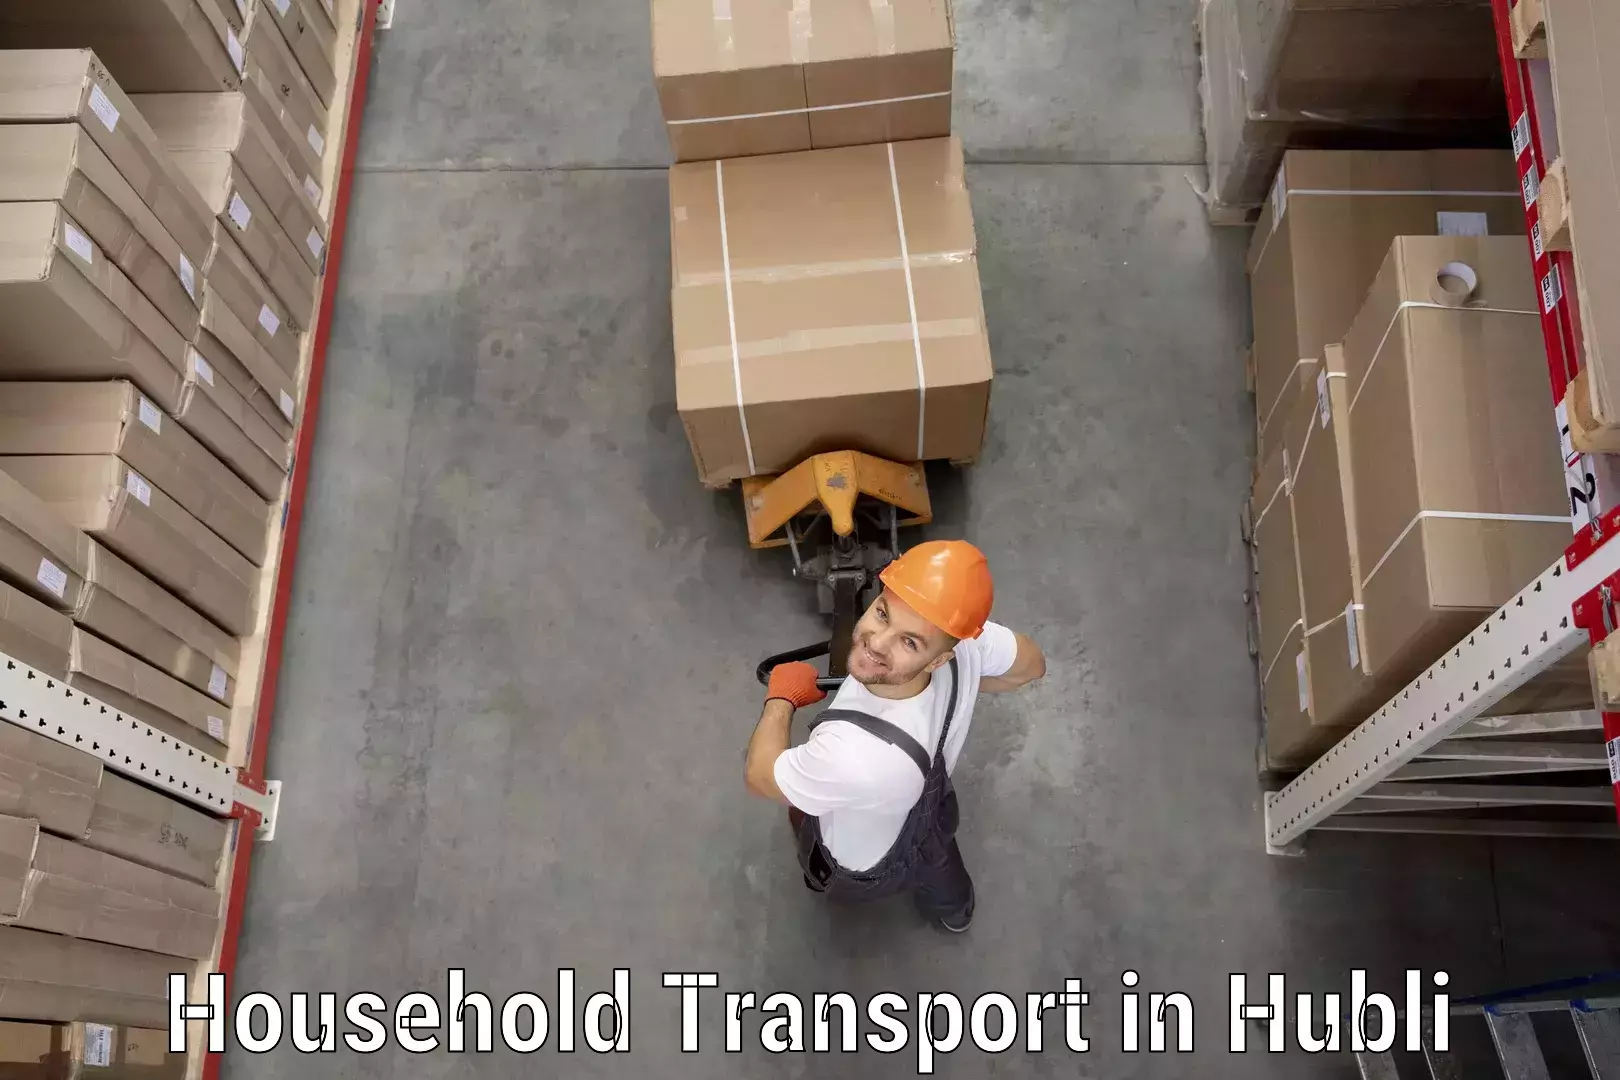 Household moving and handling in Hubli